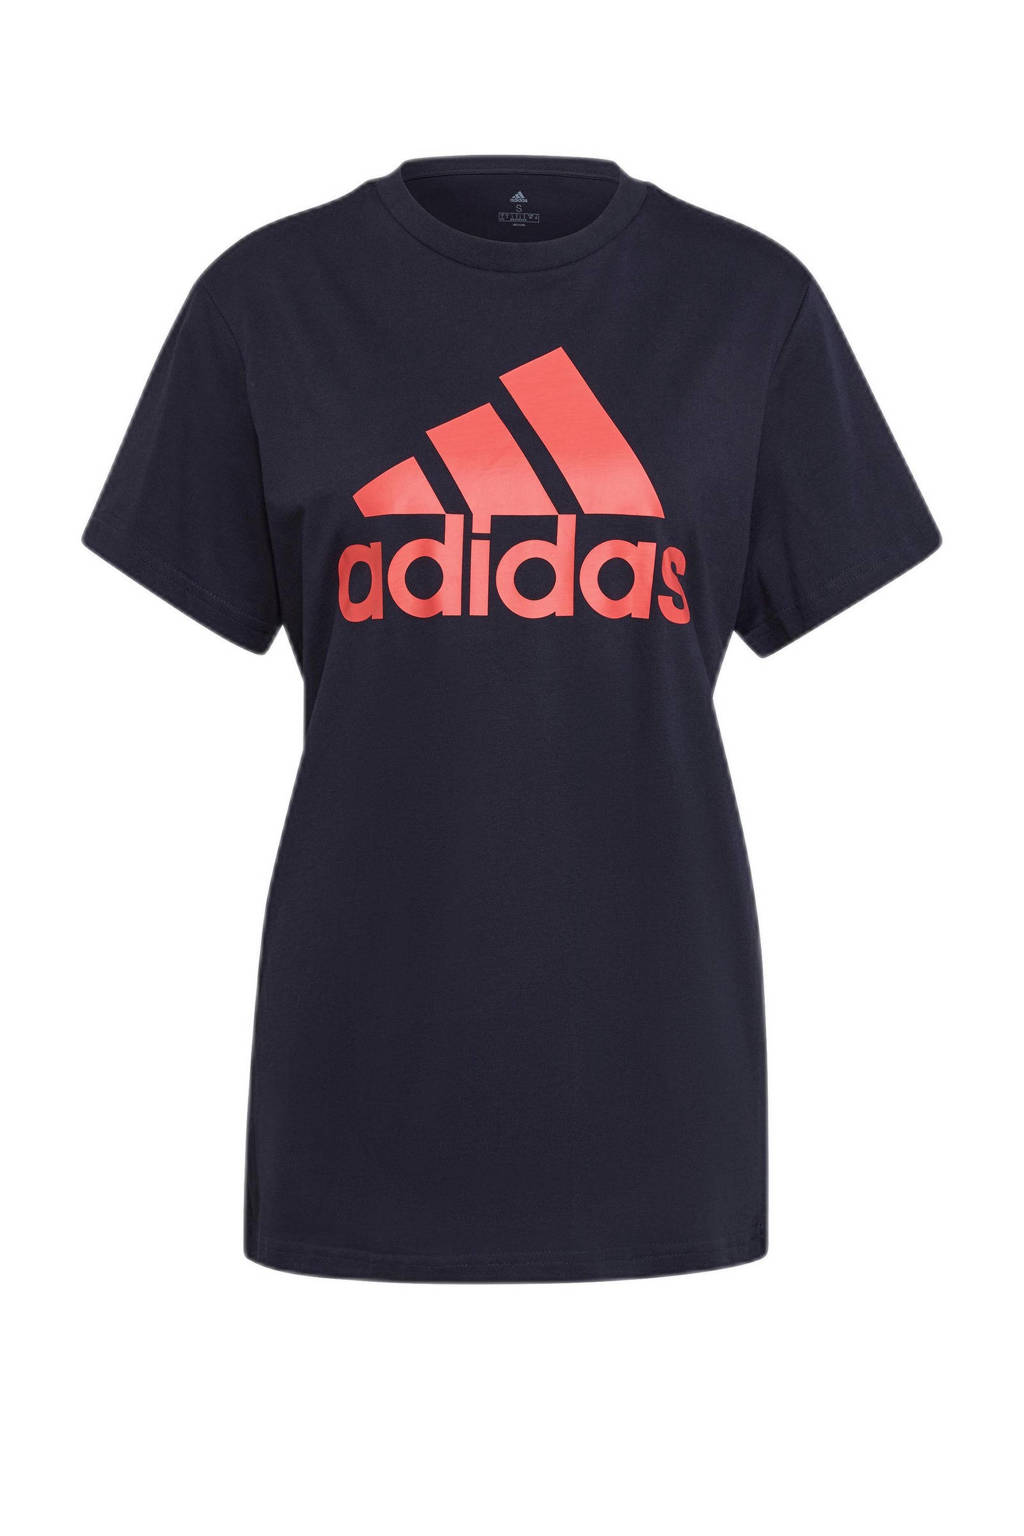 adidas Performance sport T-shirt donkerblauw/rood